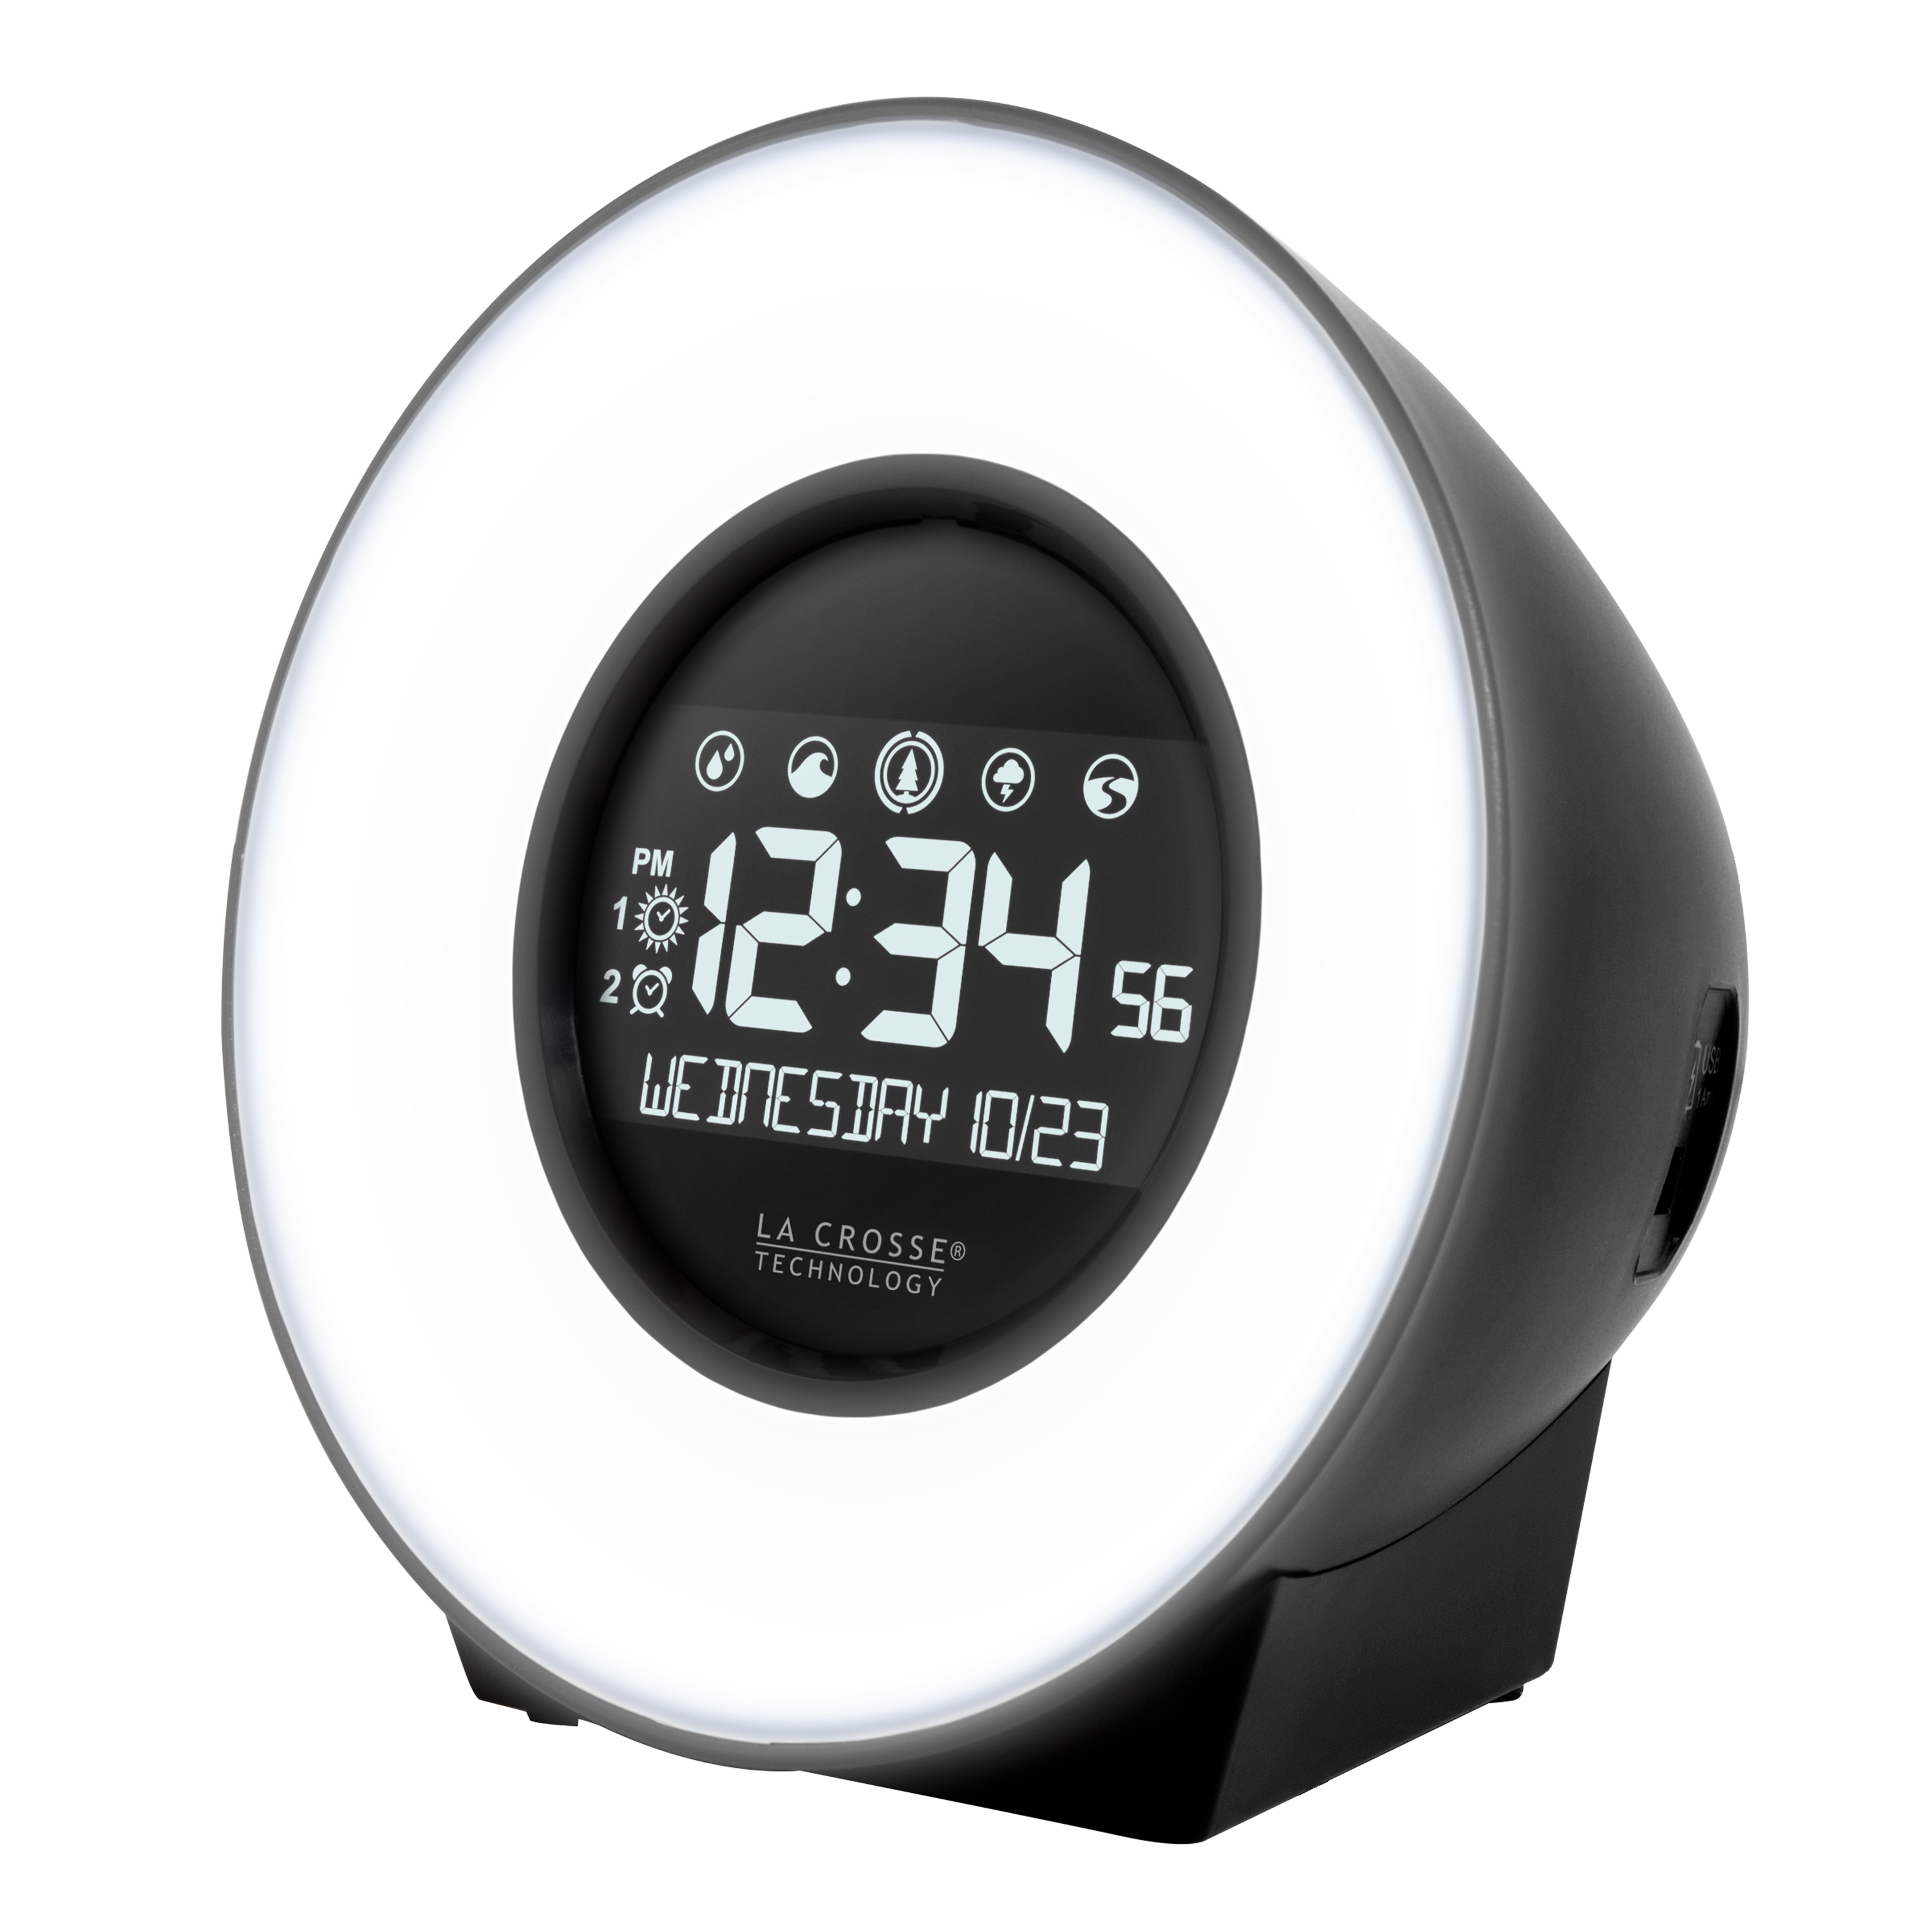 La Crosse Technology C83117 Multi-Color LCD Desk Digital Alarm Clock with Sounds and USB - image 5 of 10